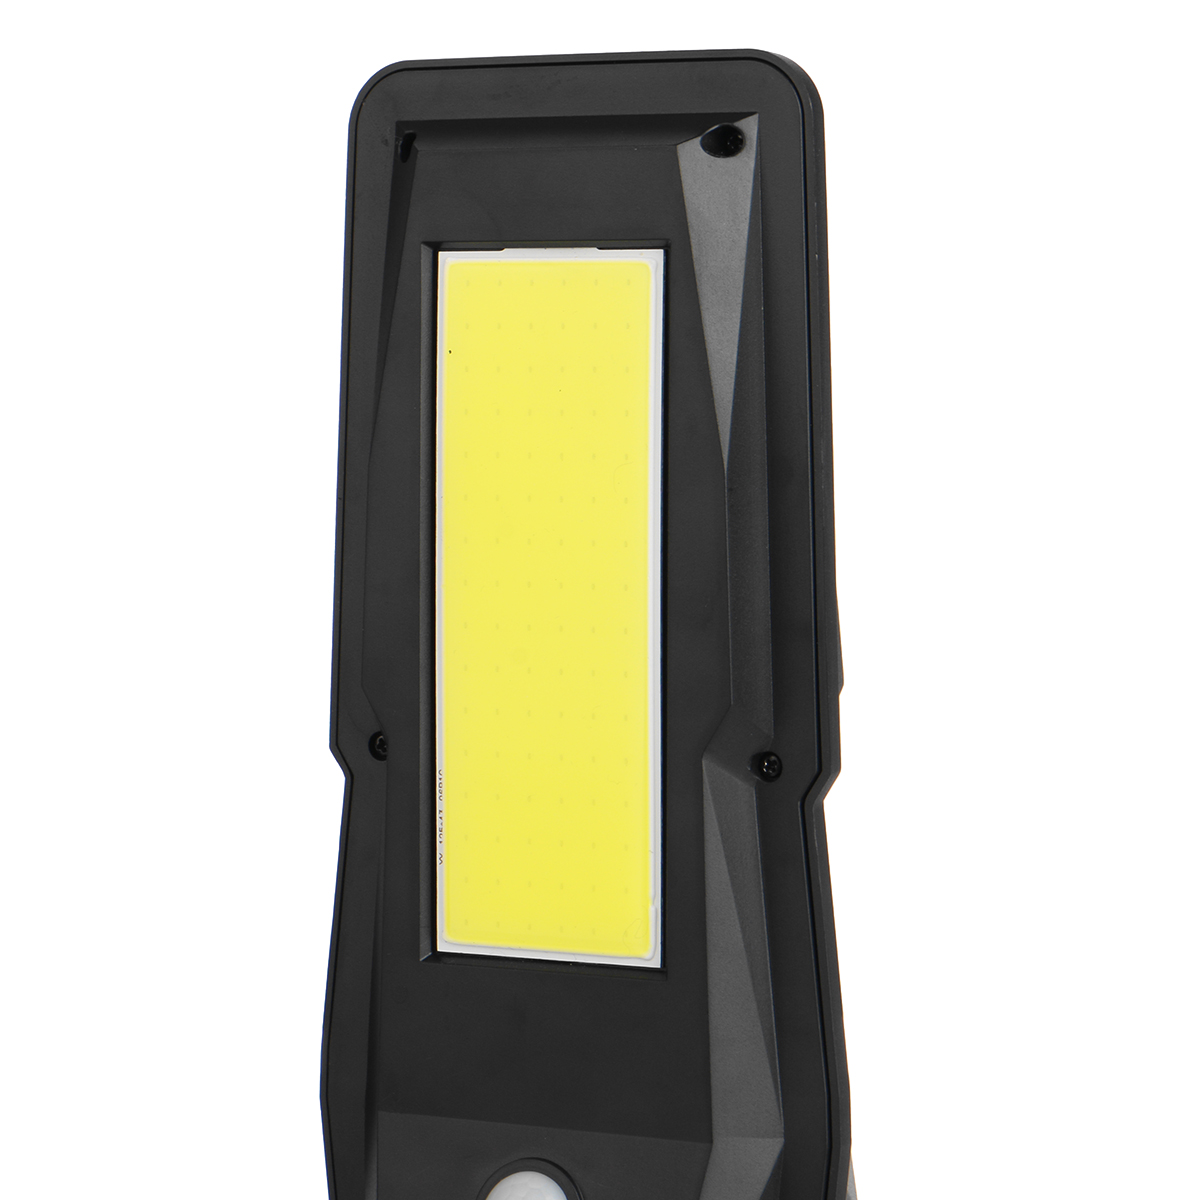 96COB Solar Street Light PIR Motion Sensor Timing Safety Lamp